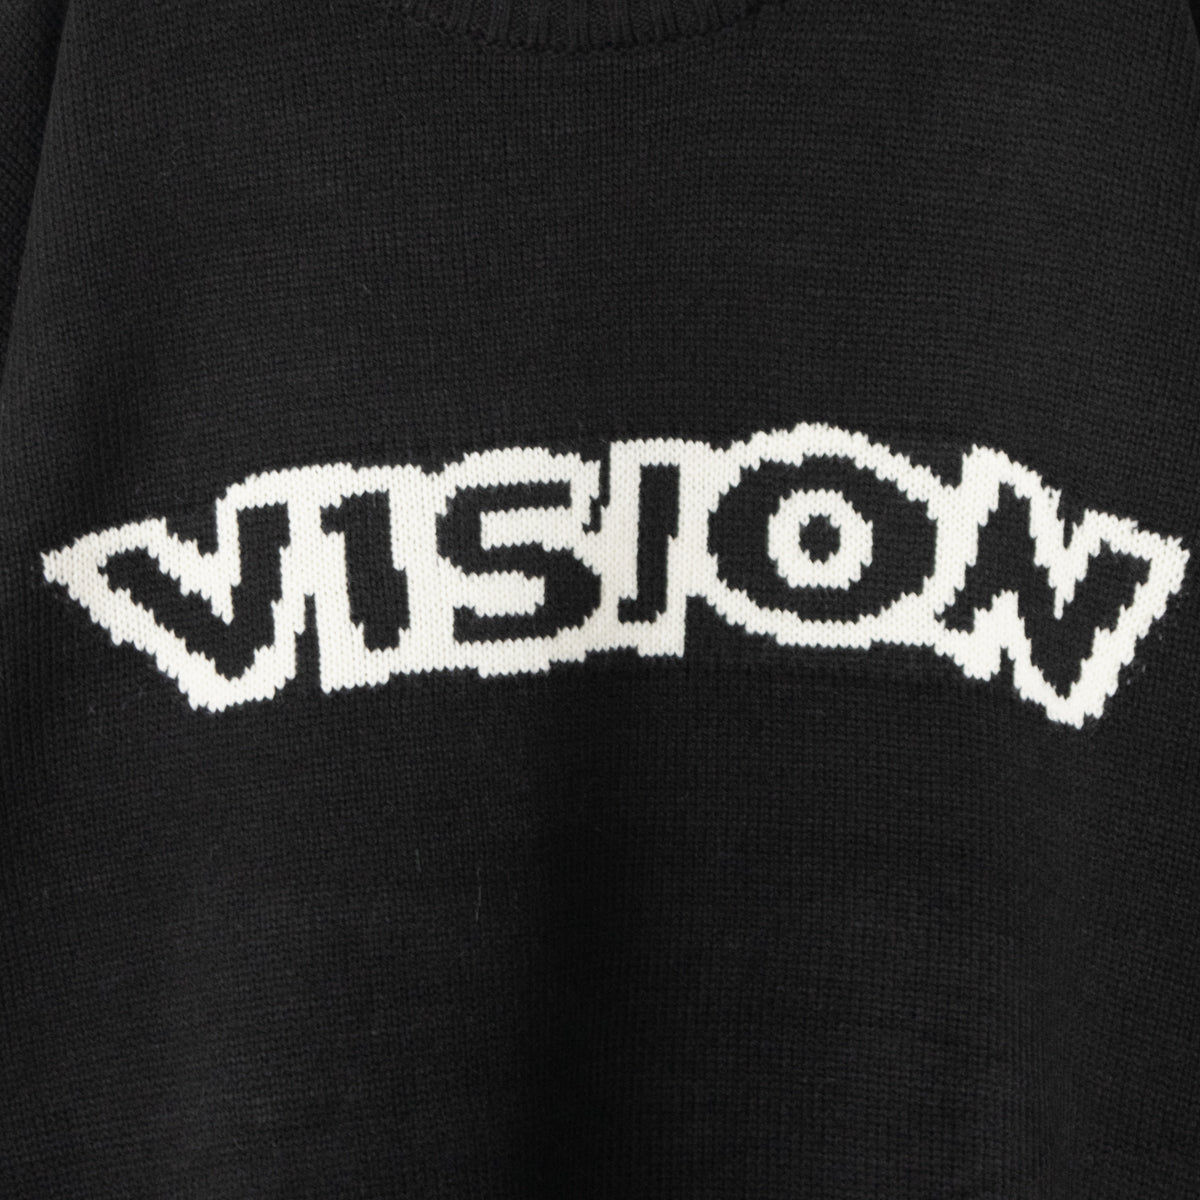 VISION STREET WEAR x BETTY BOOP Jacquard Knit BLACK